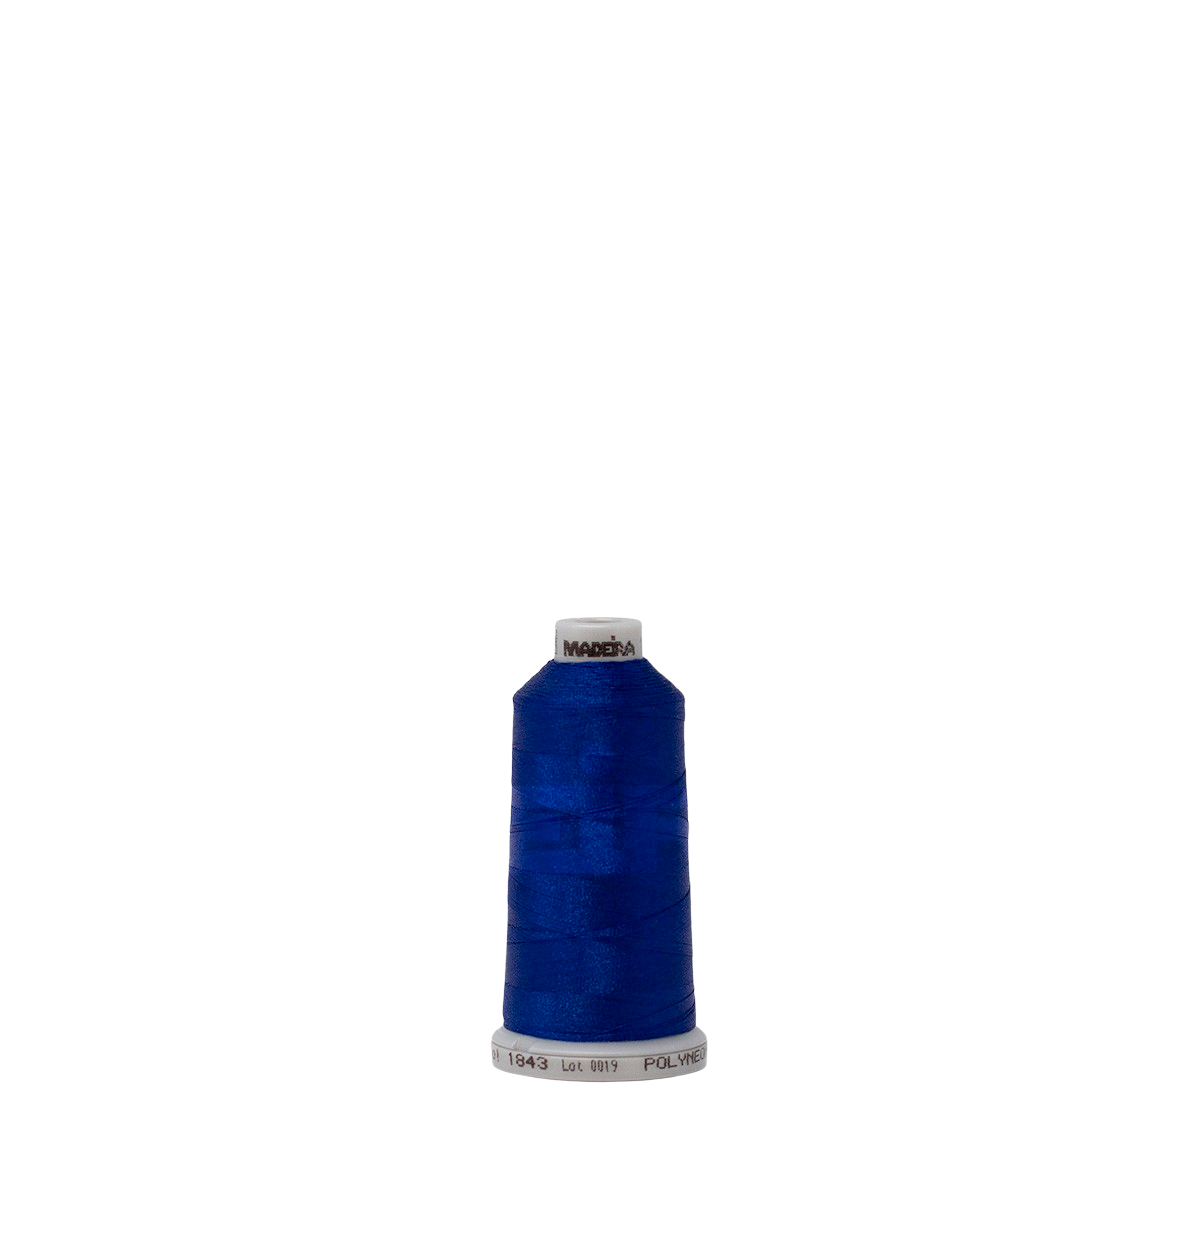 Persian Blue 1843 #40 Weight Madeira Polyneon Thread